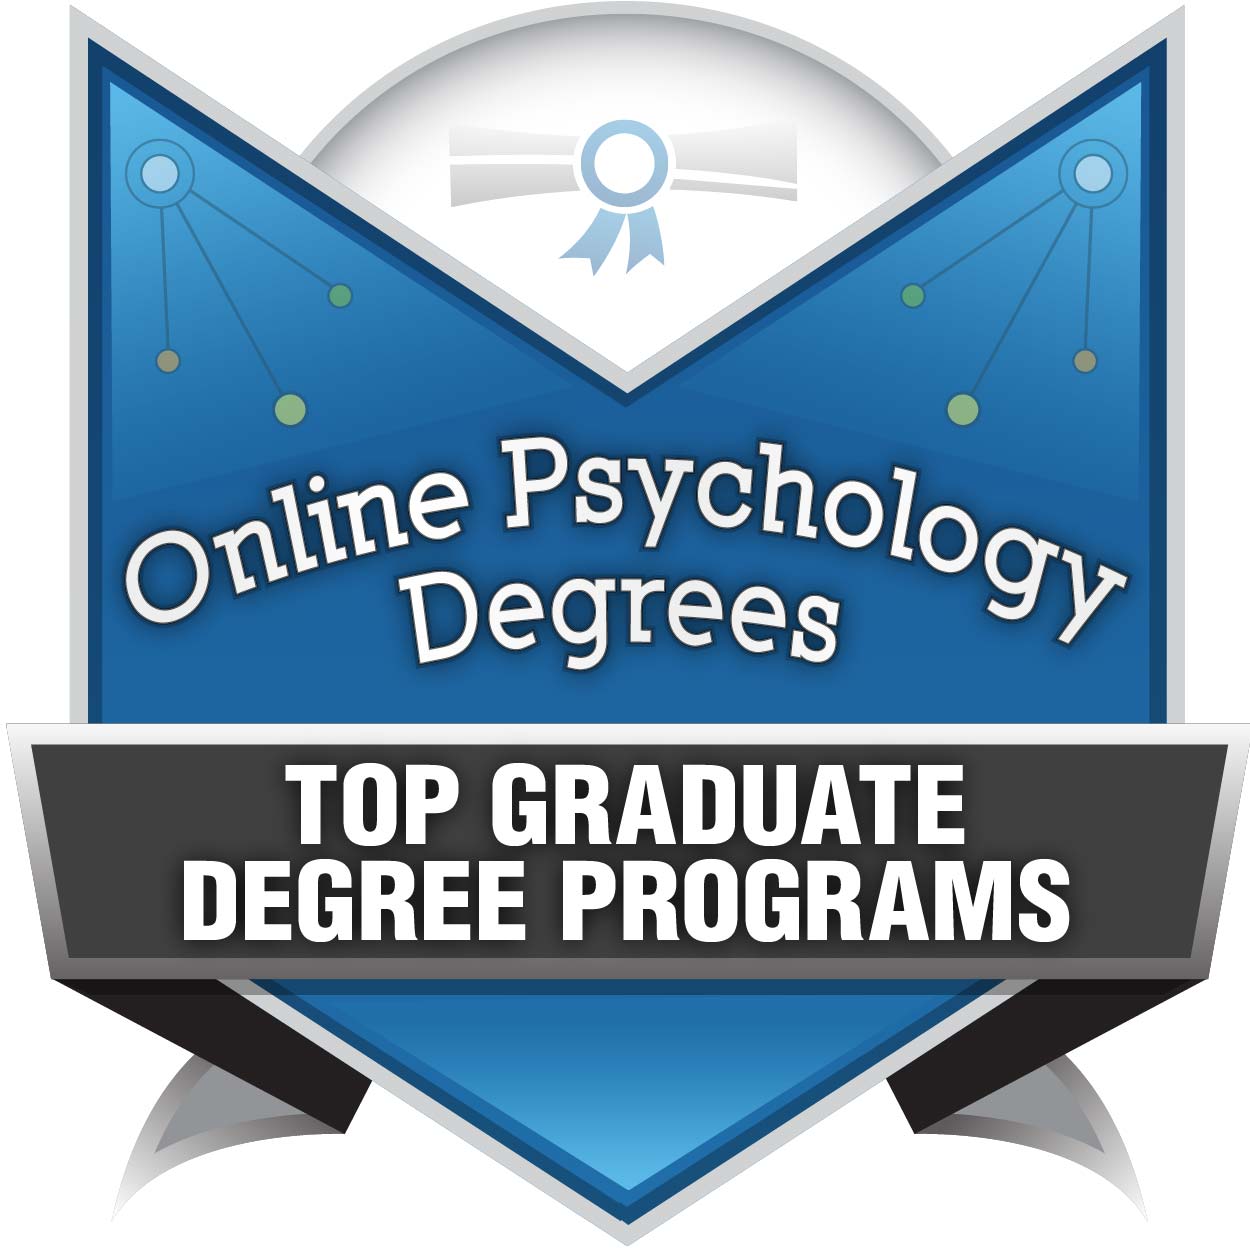 Online Psychology Degrees Top Graduate Degree Programs 01 